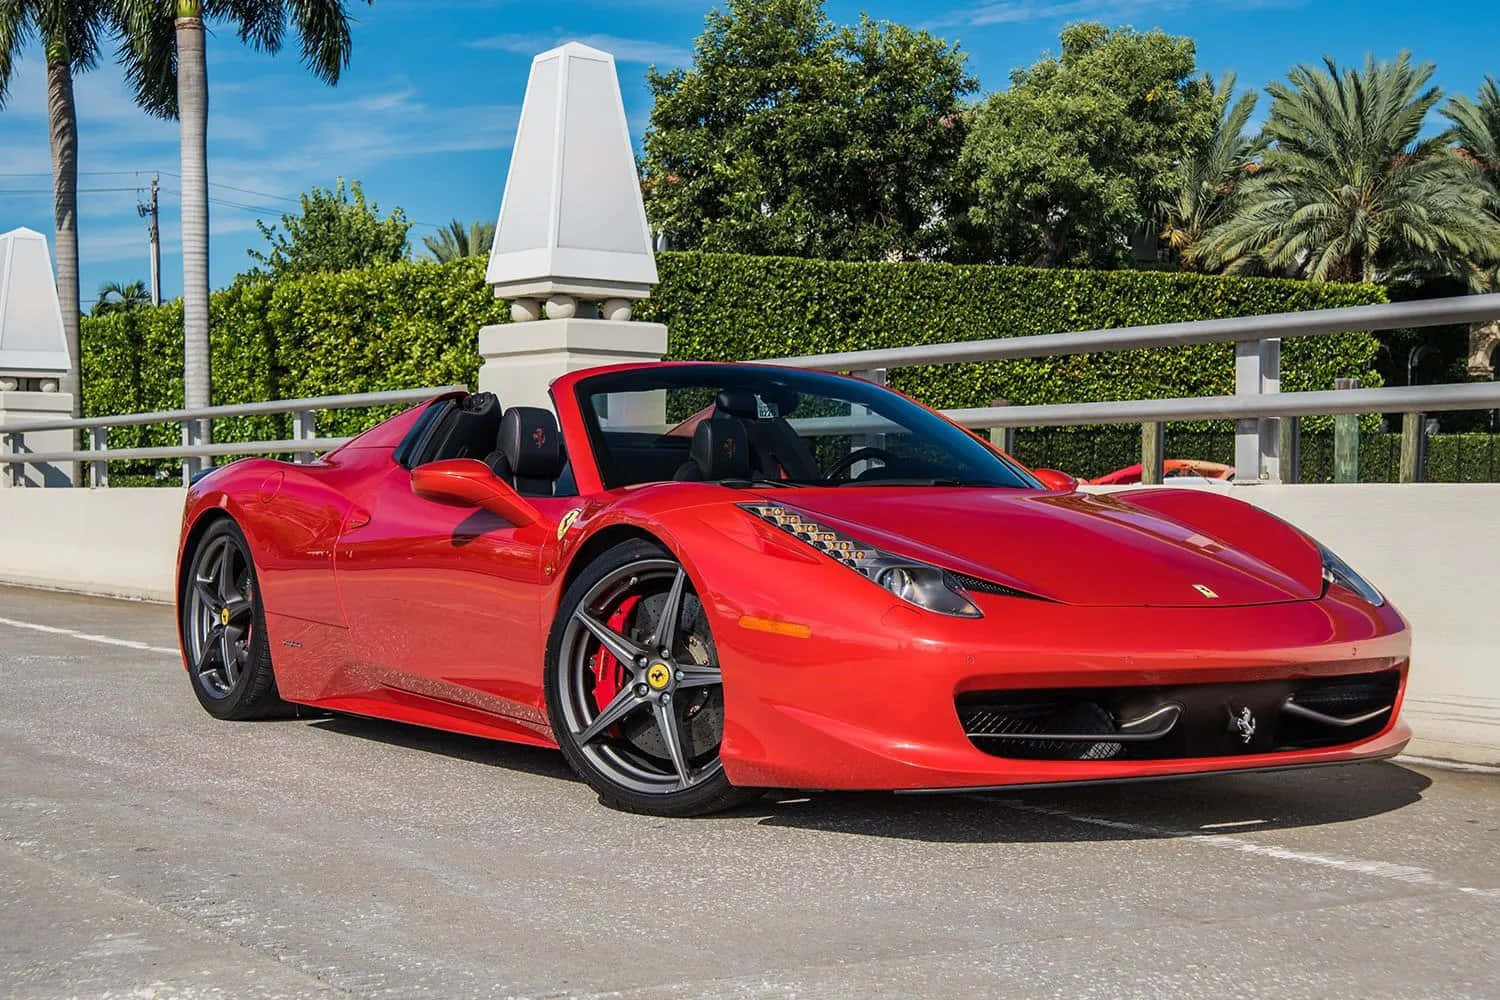 "Thrilling sophistication of the iconic Ferrari"